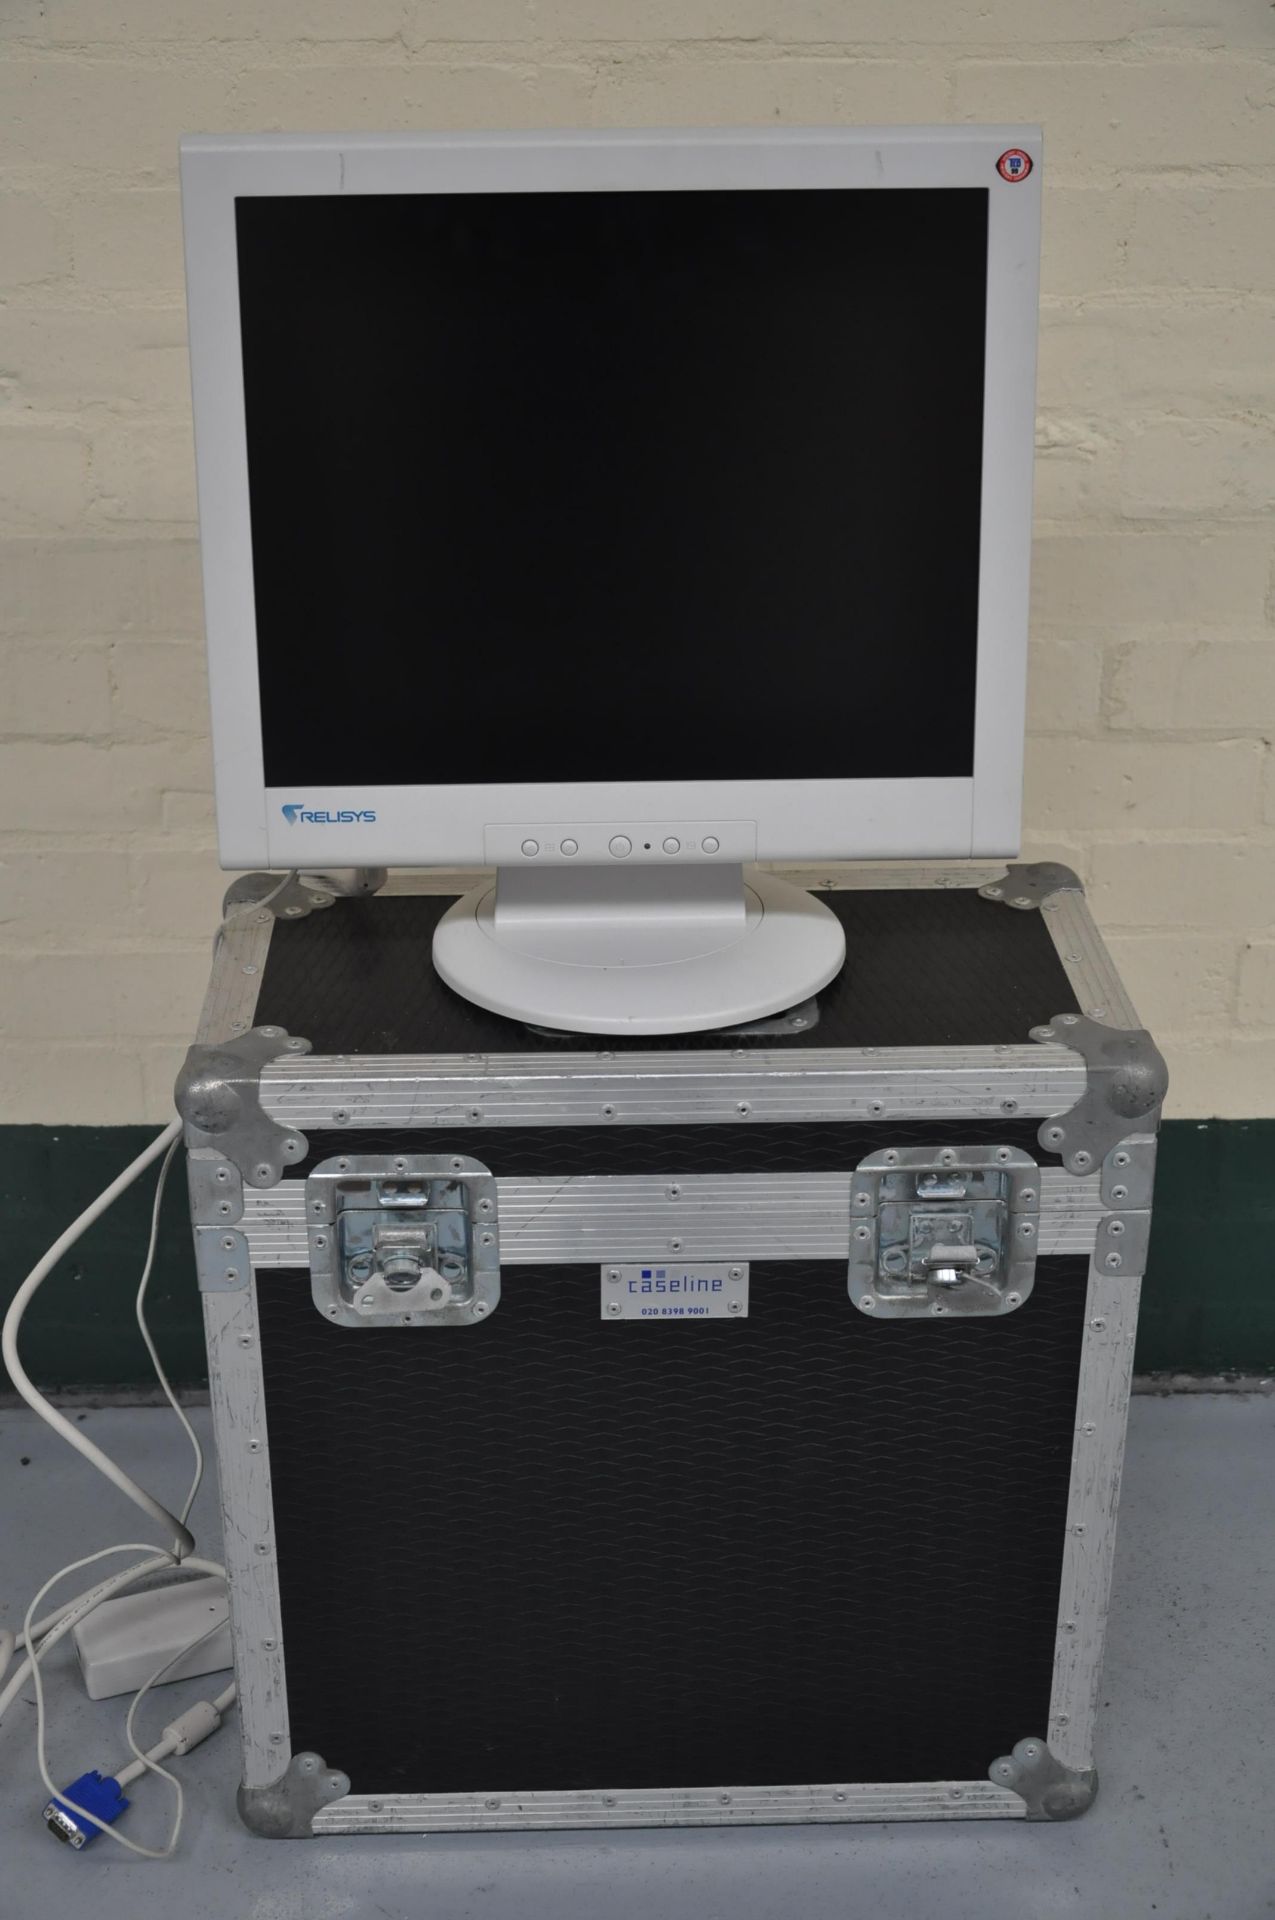 Caseline flight case - 50cm x 27cm x 50cm - with Relysis 19" monitor